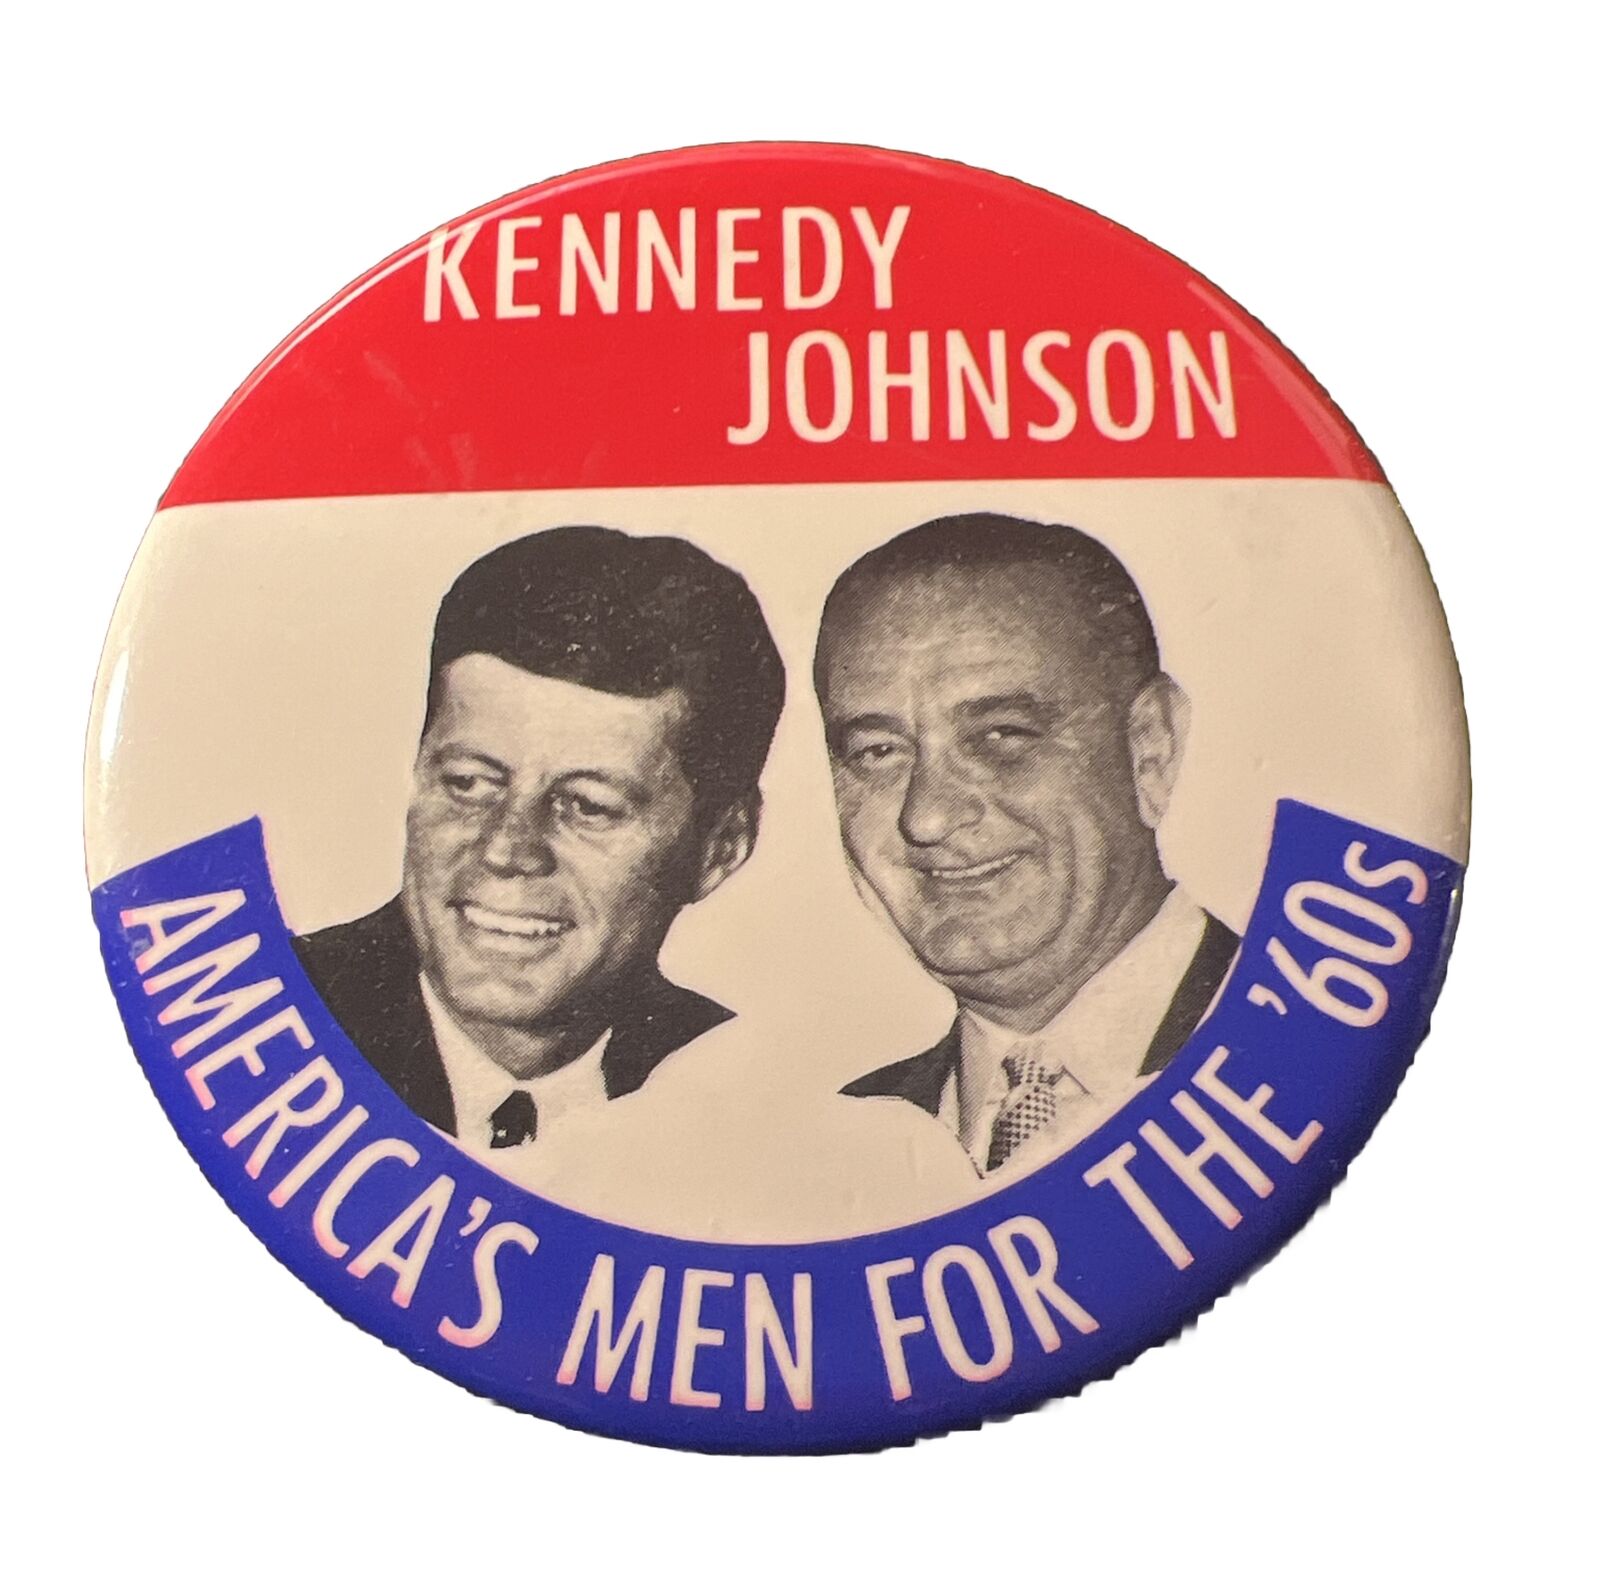 1960 KENNEDY JOHNSON AMERICA'S MEN FOR THE '60s large 4